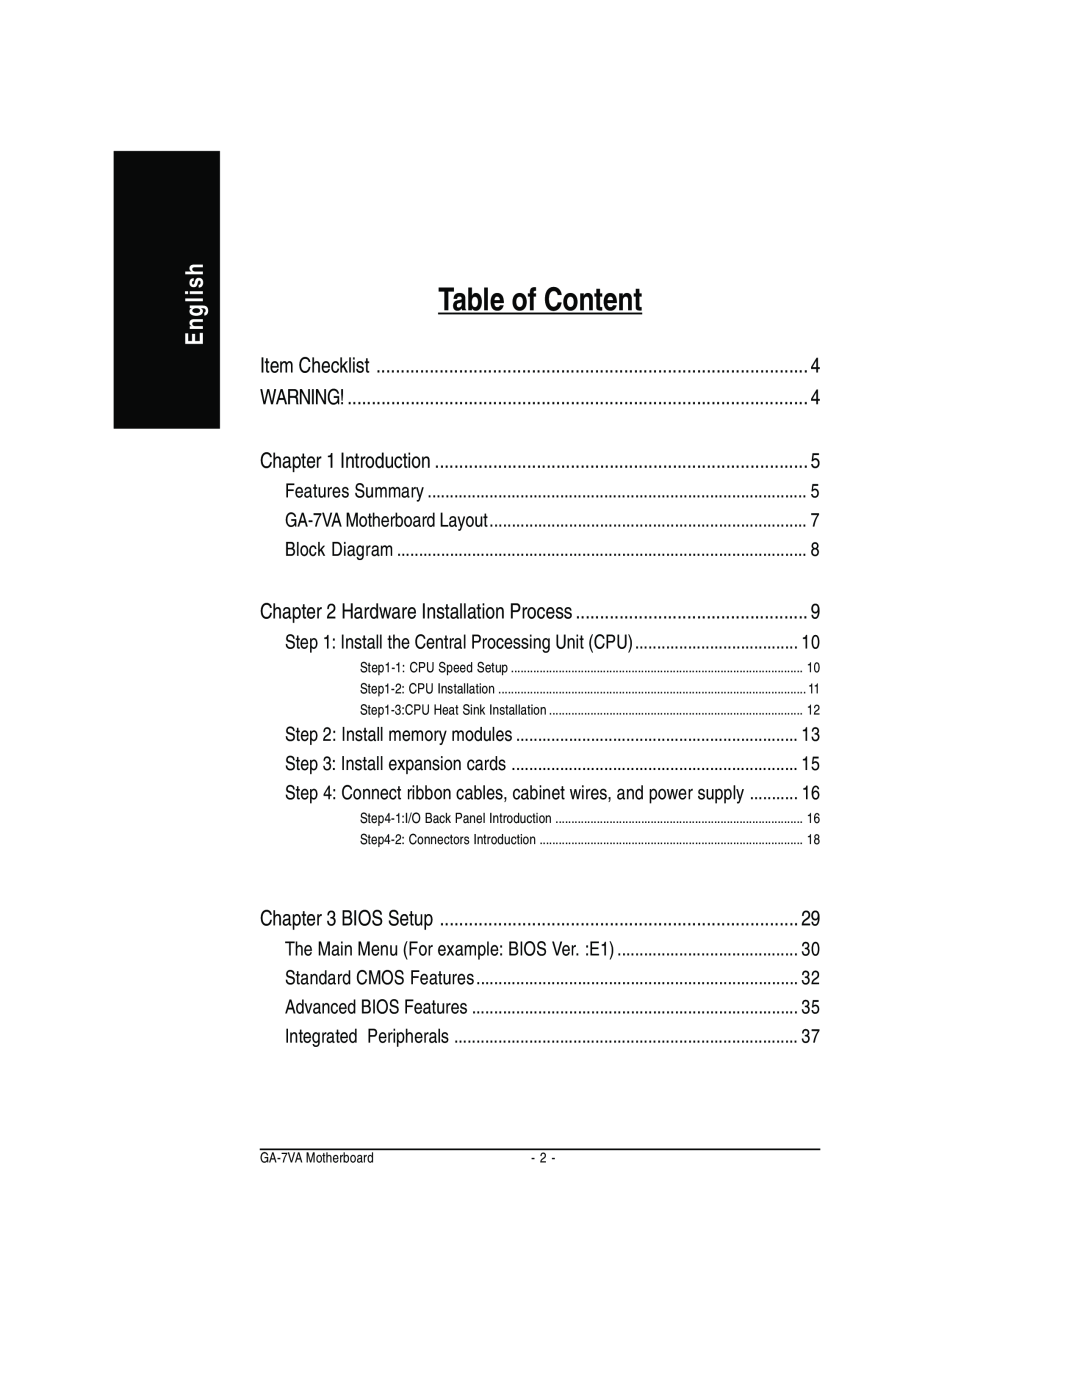 Gigabyte GA-7VA manual English, Table of Content 